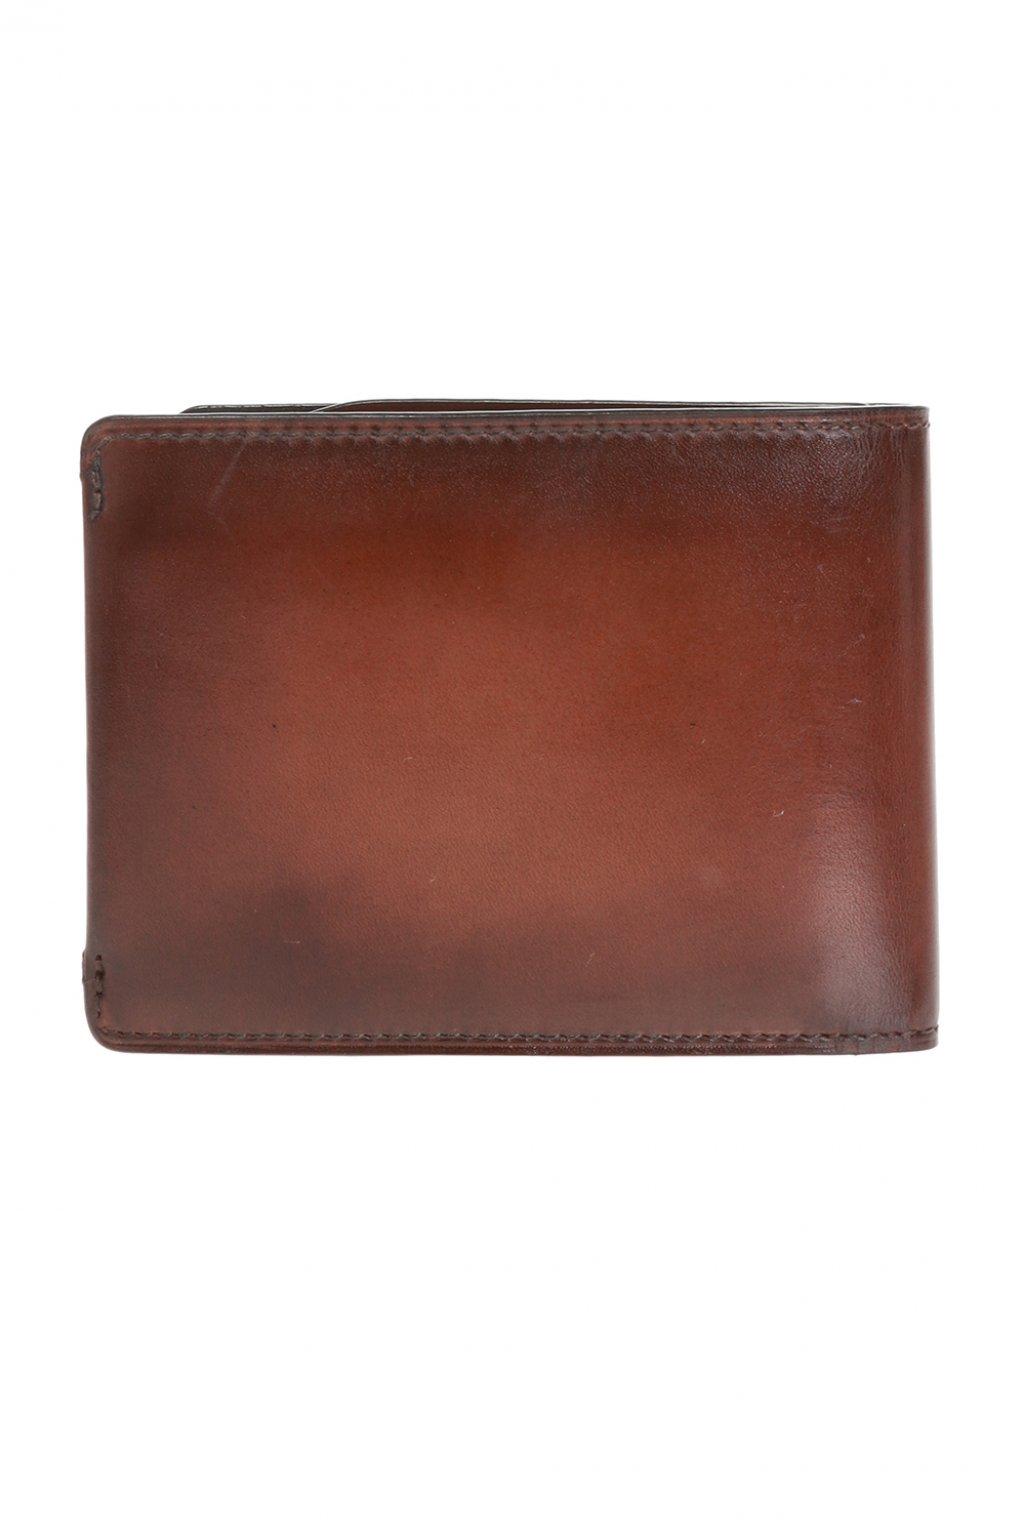 Berluti Leather Bifold Wallet Brown for Men - Lyst